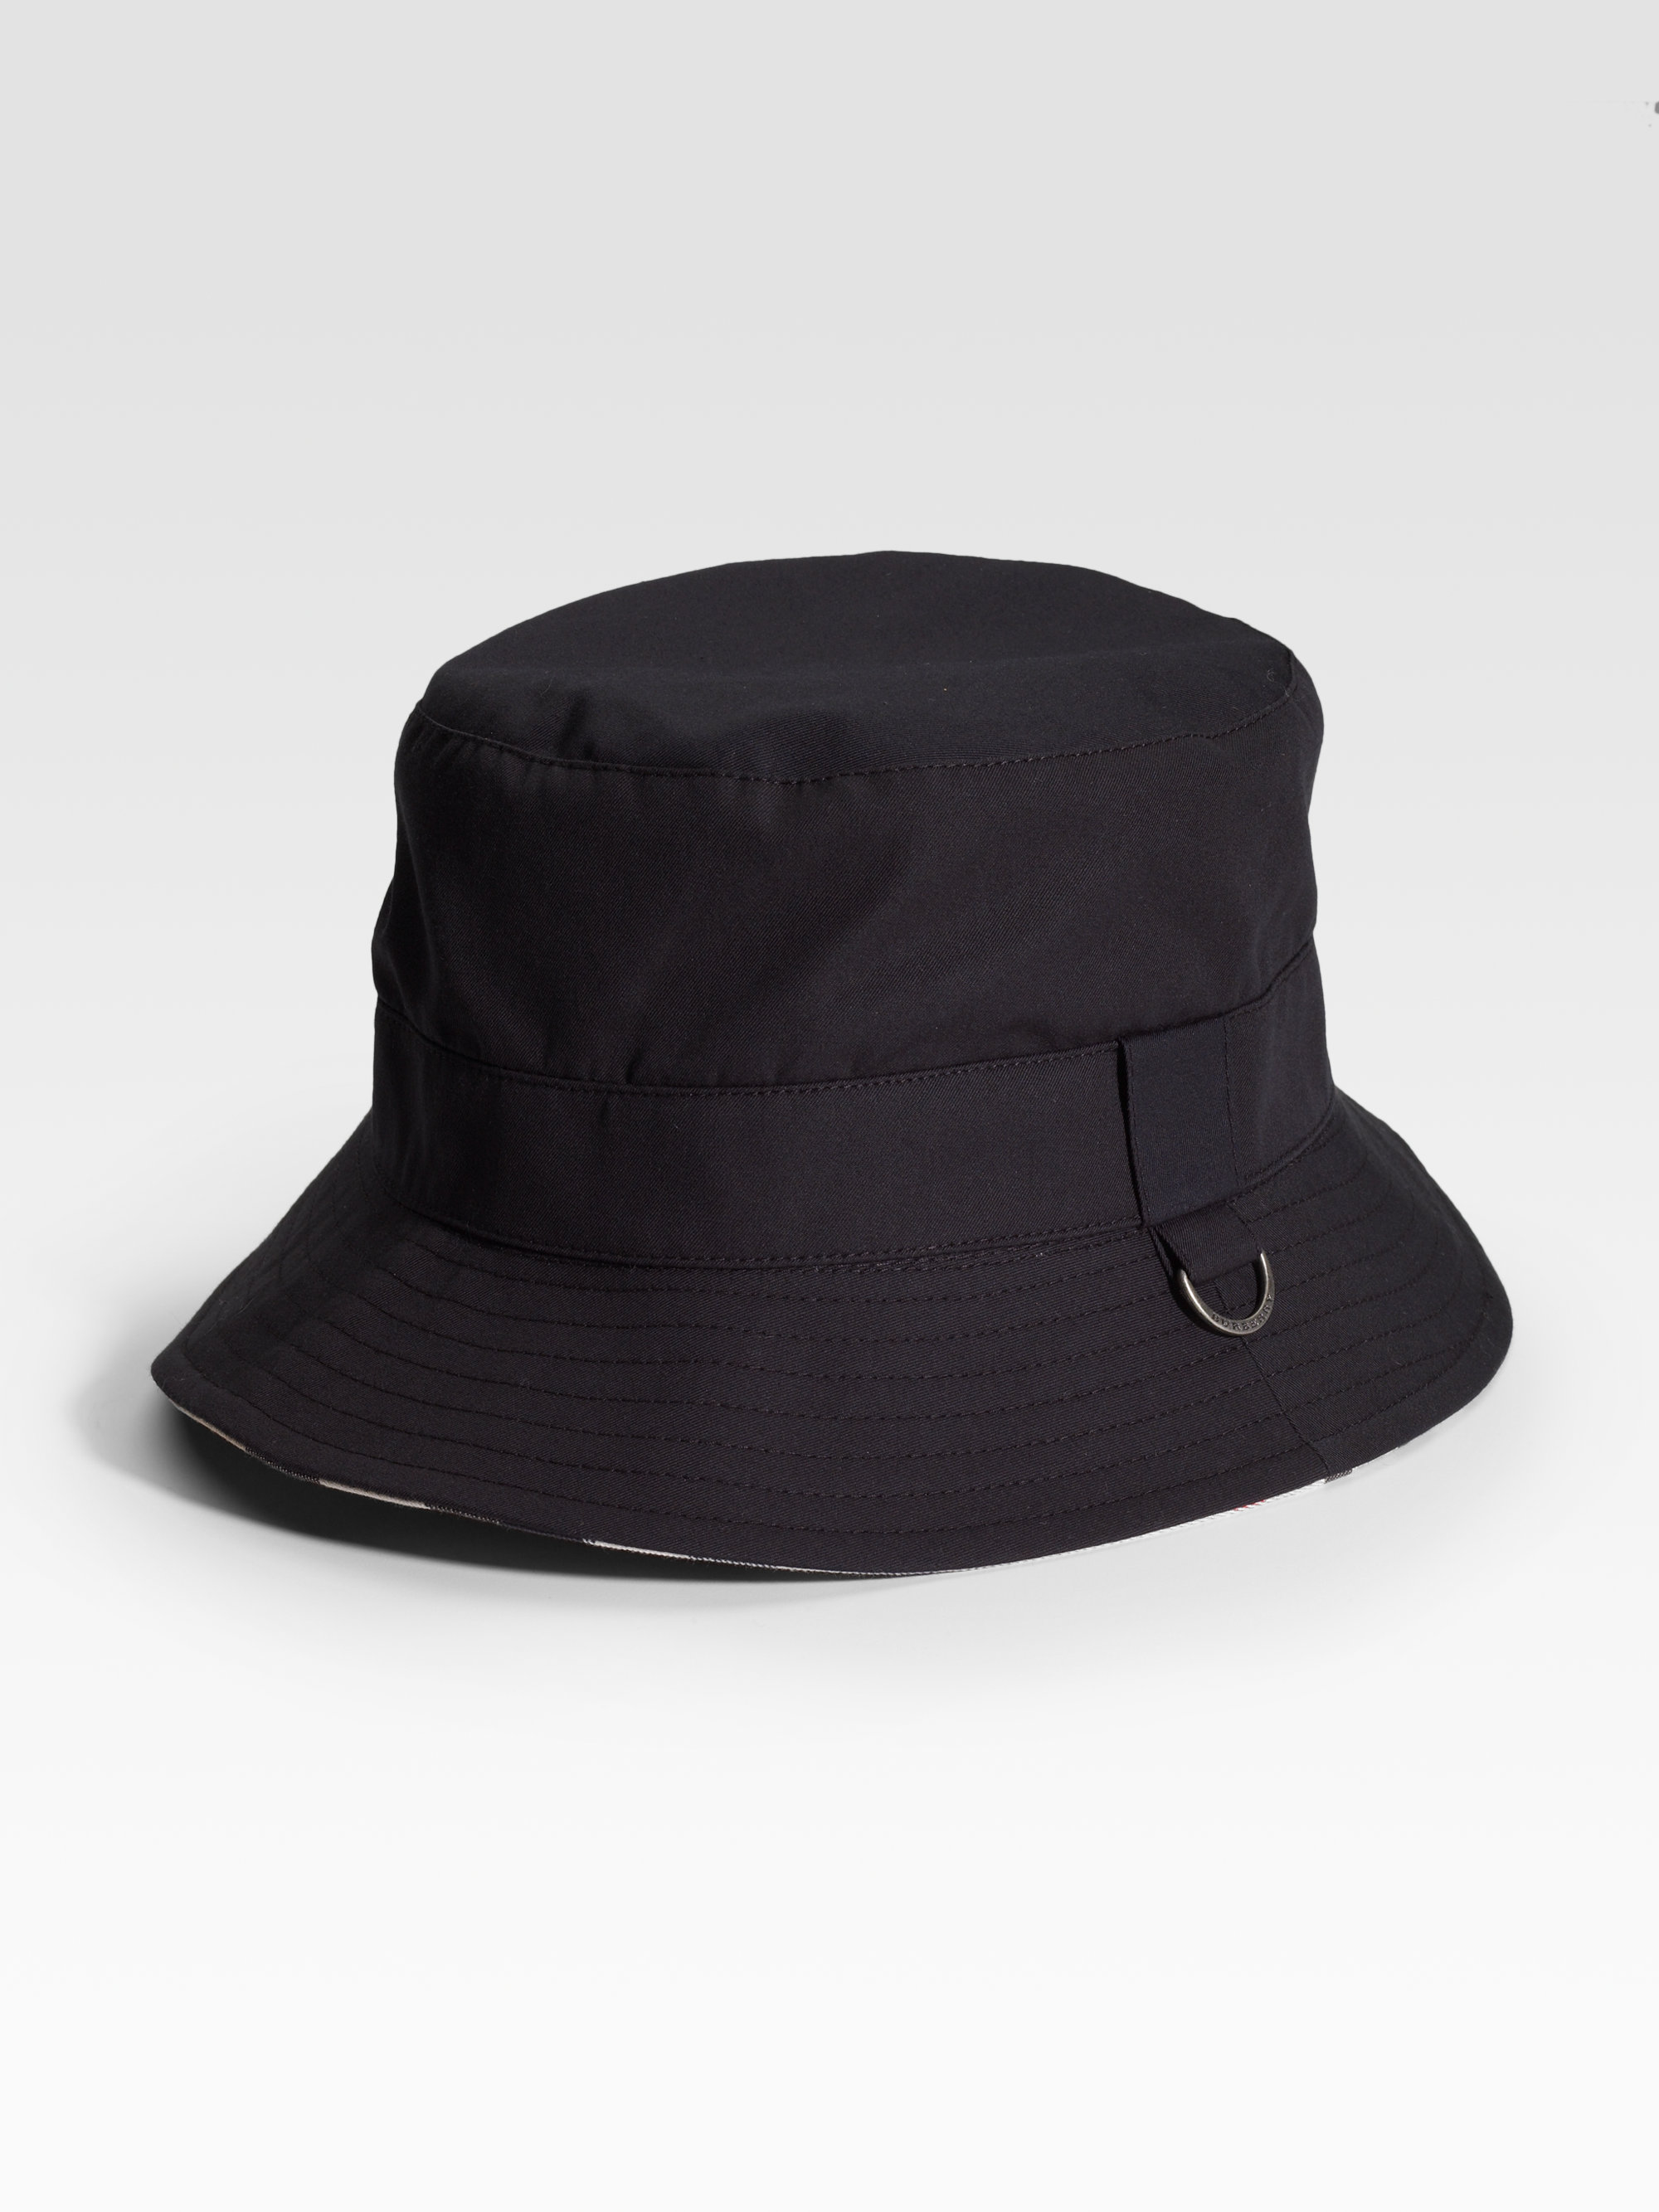 Burberry Bucket Hat in Black for Men - Lyst